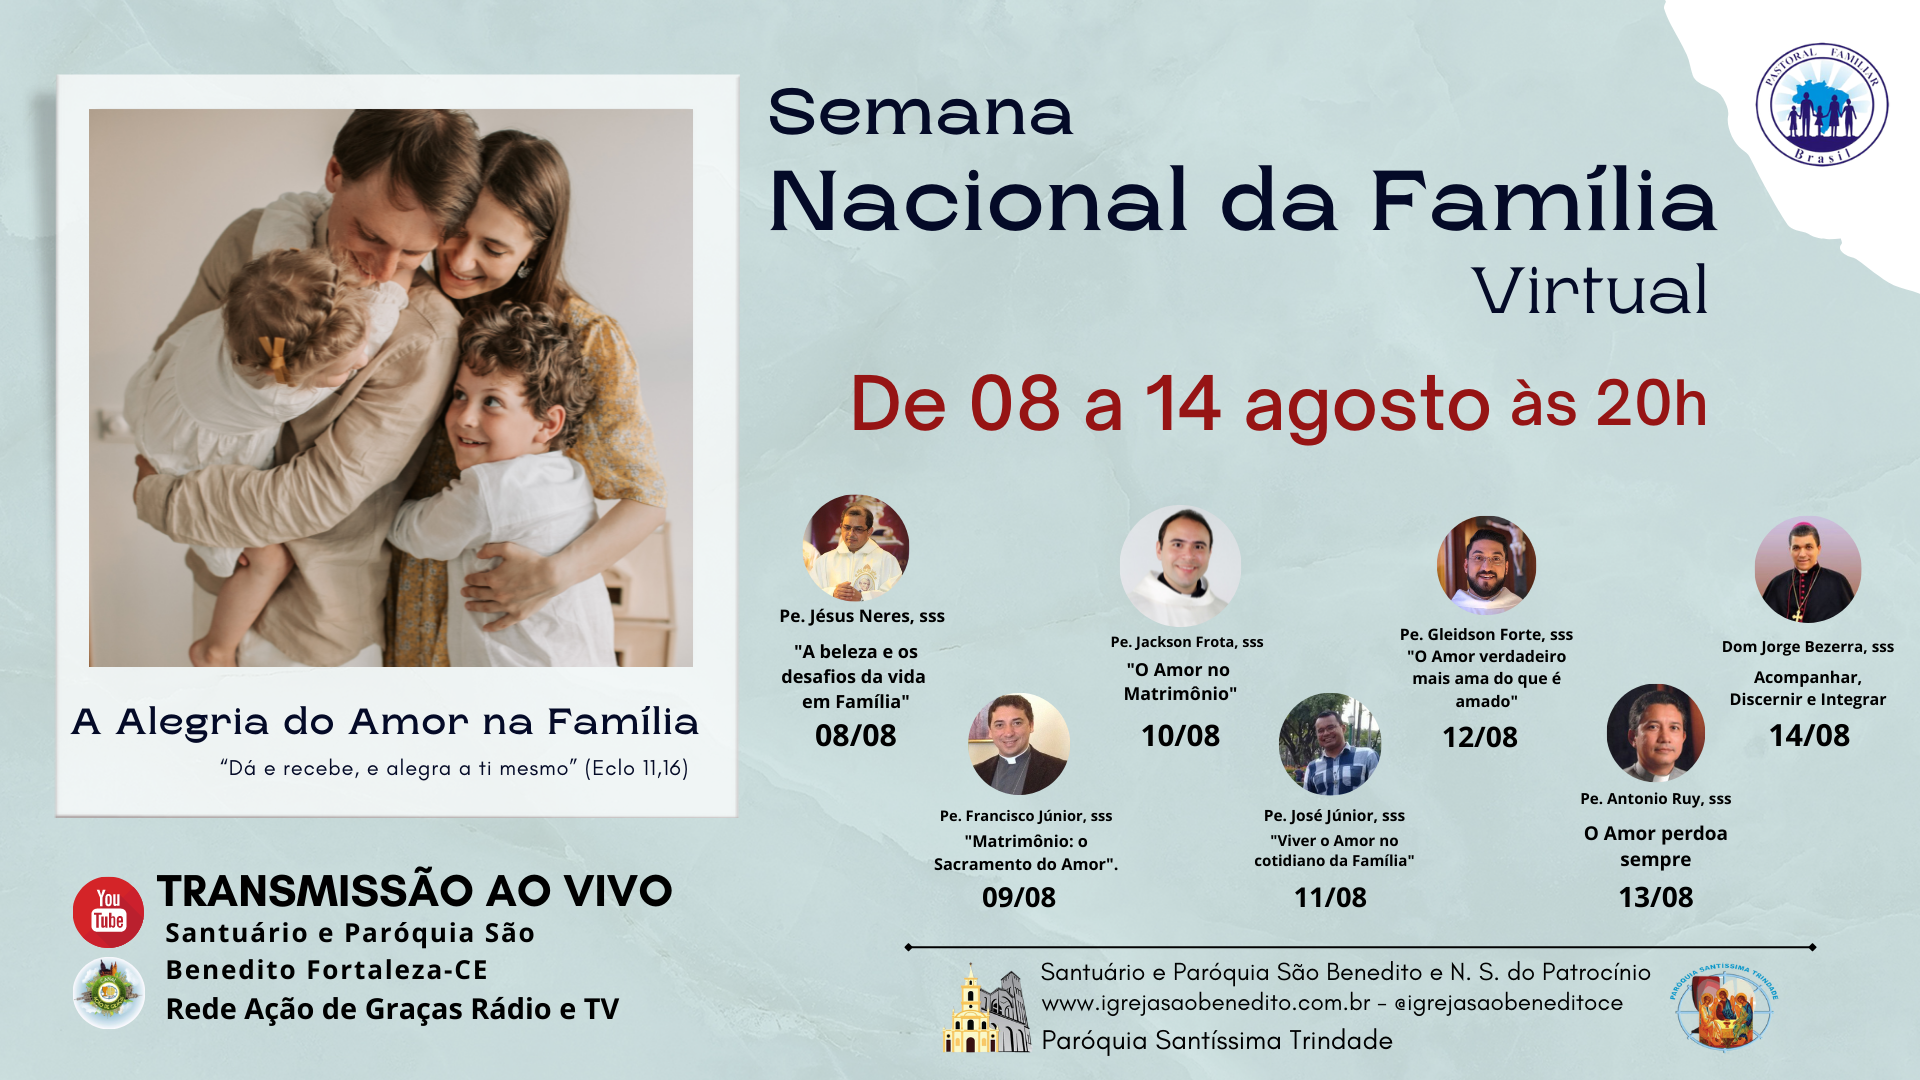 Semana Nacional da Família Virtual de 08 a 14 de agosto. Participe!